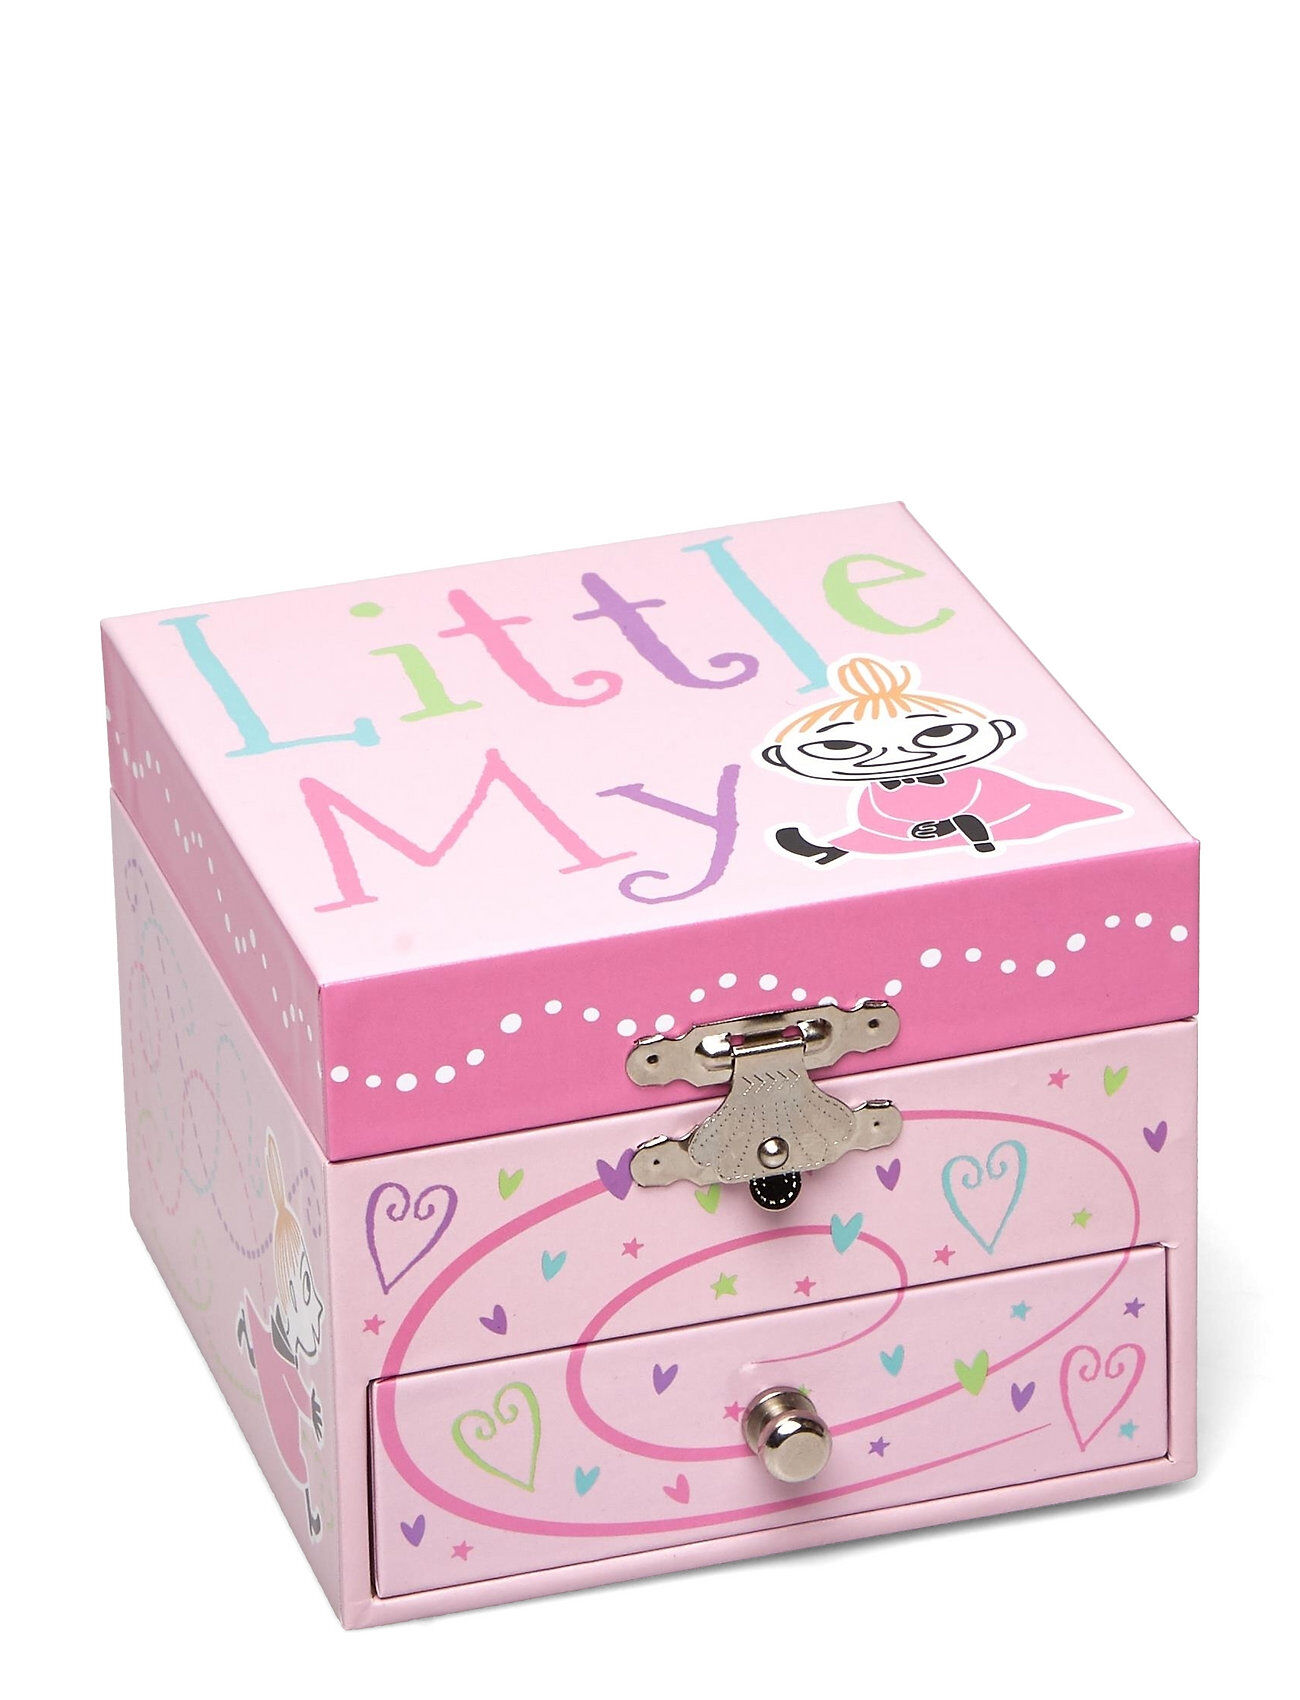 Martinex Little My Music Box Square Home Kids Decor Decoration Accessories/details Rosa Martinex